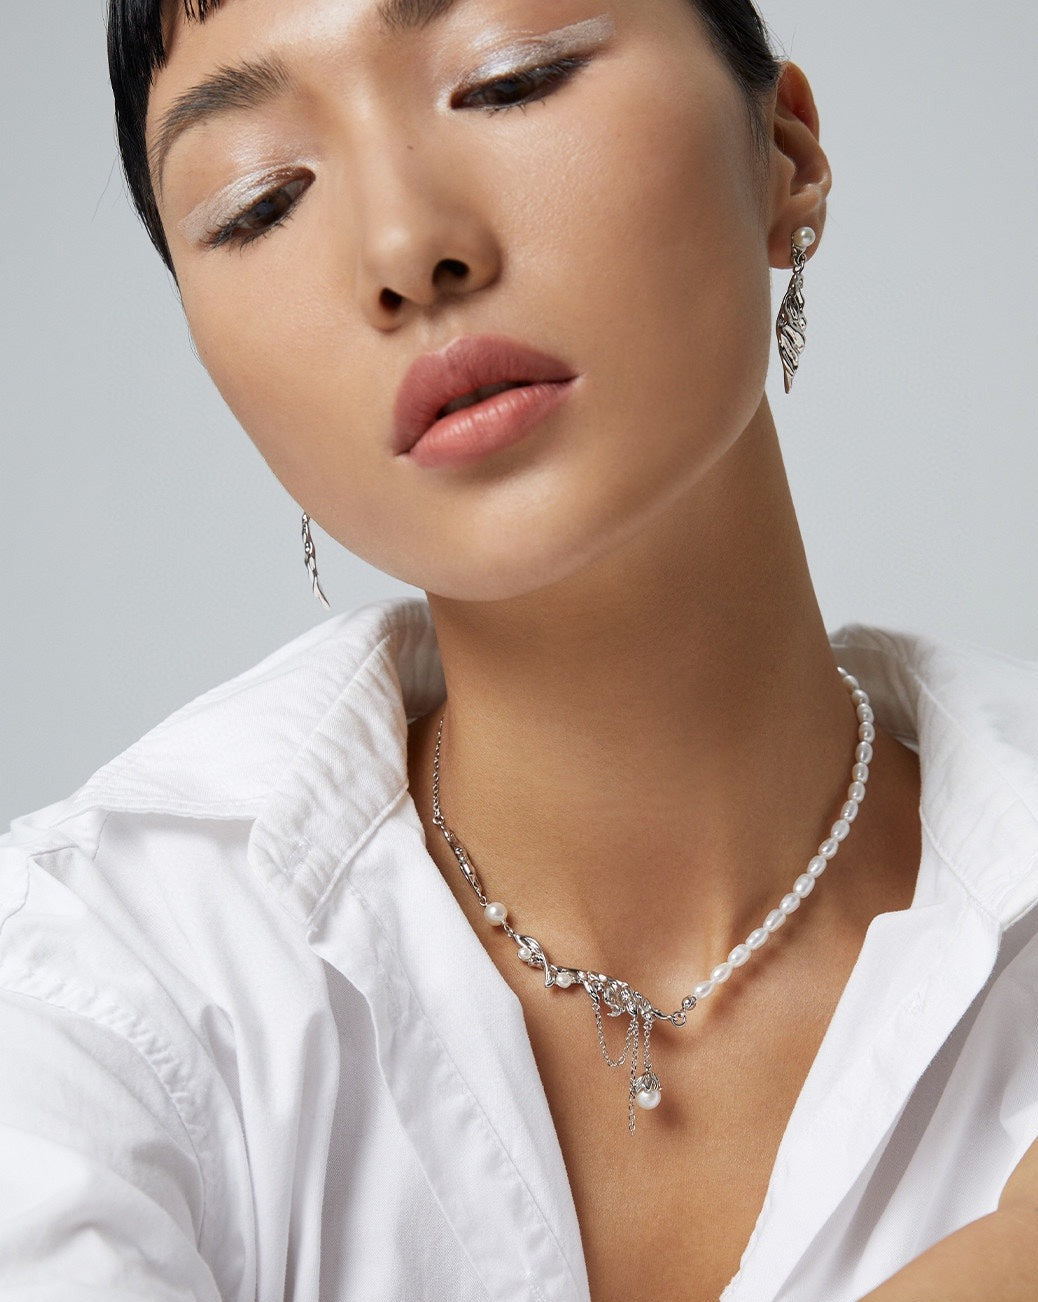 fashion-jewelry-minimalist-jewelry-design-jewelry-statement-necklace-pearl-earring-bracelet-rings-gold-coated-silver-bijoux-feather-shape-pearl-necklace-earrings-feather-in-the-wind